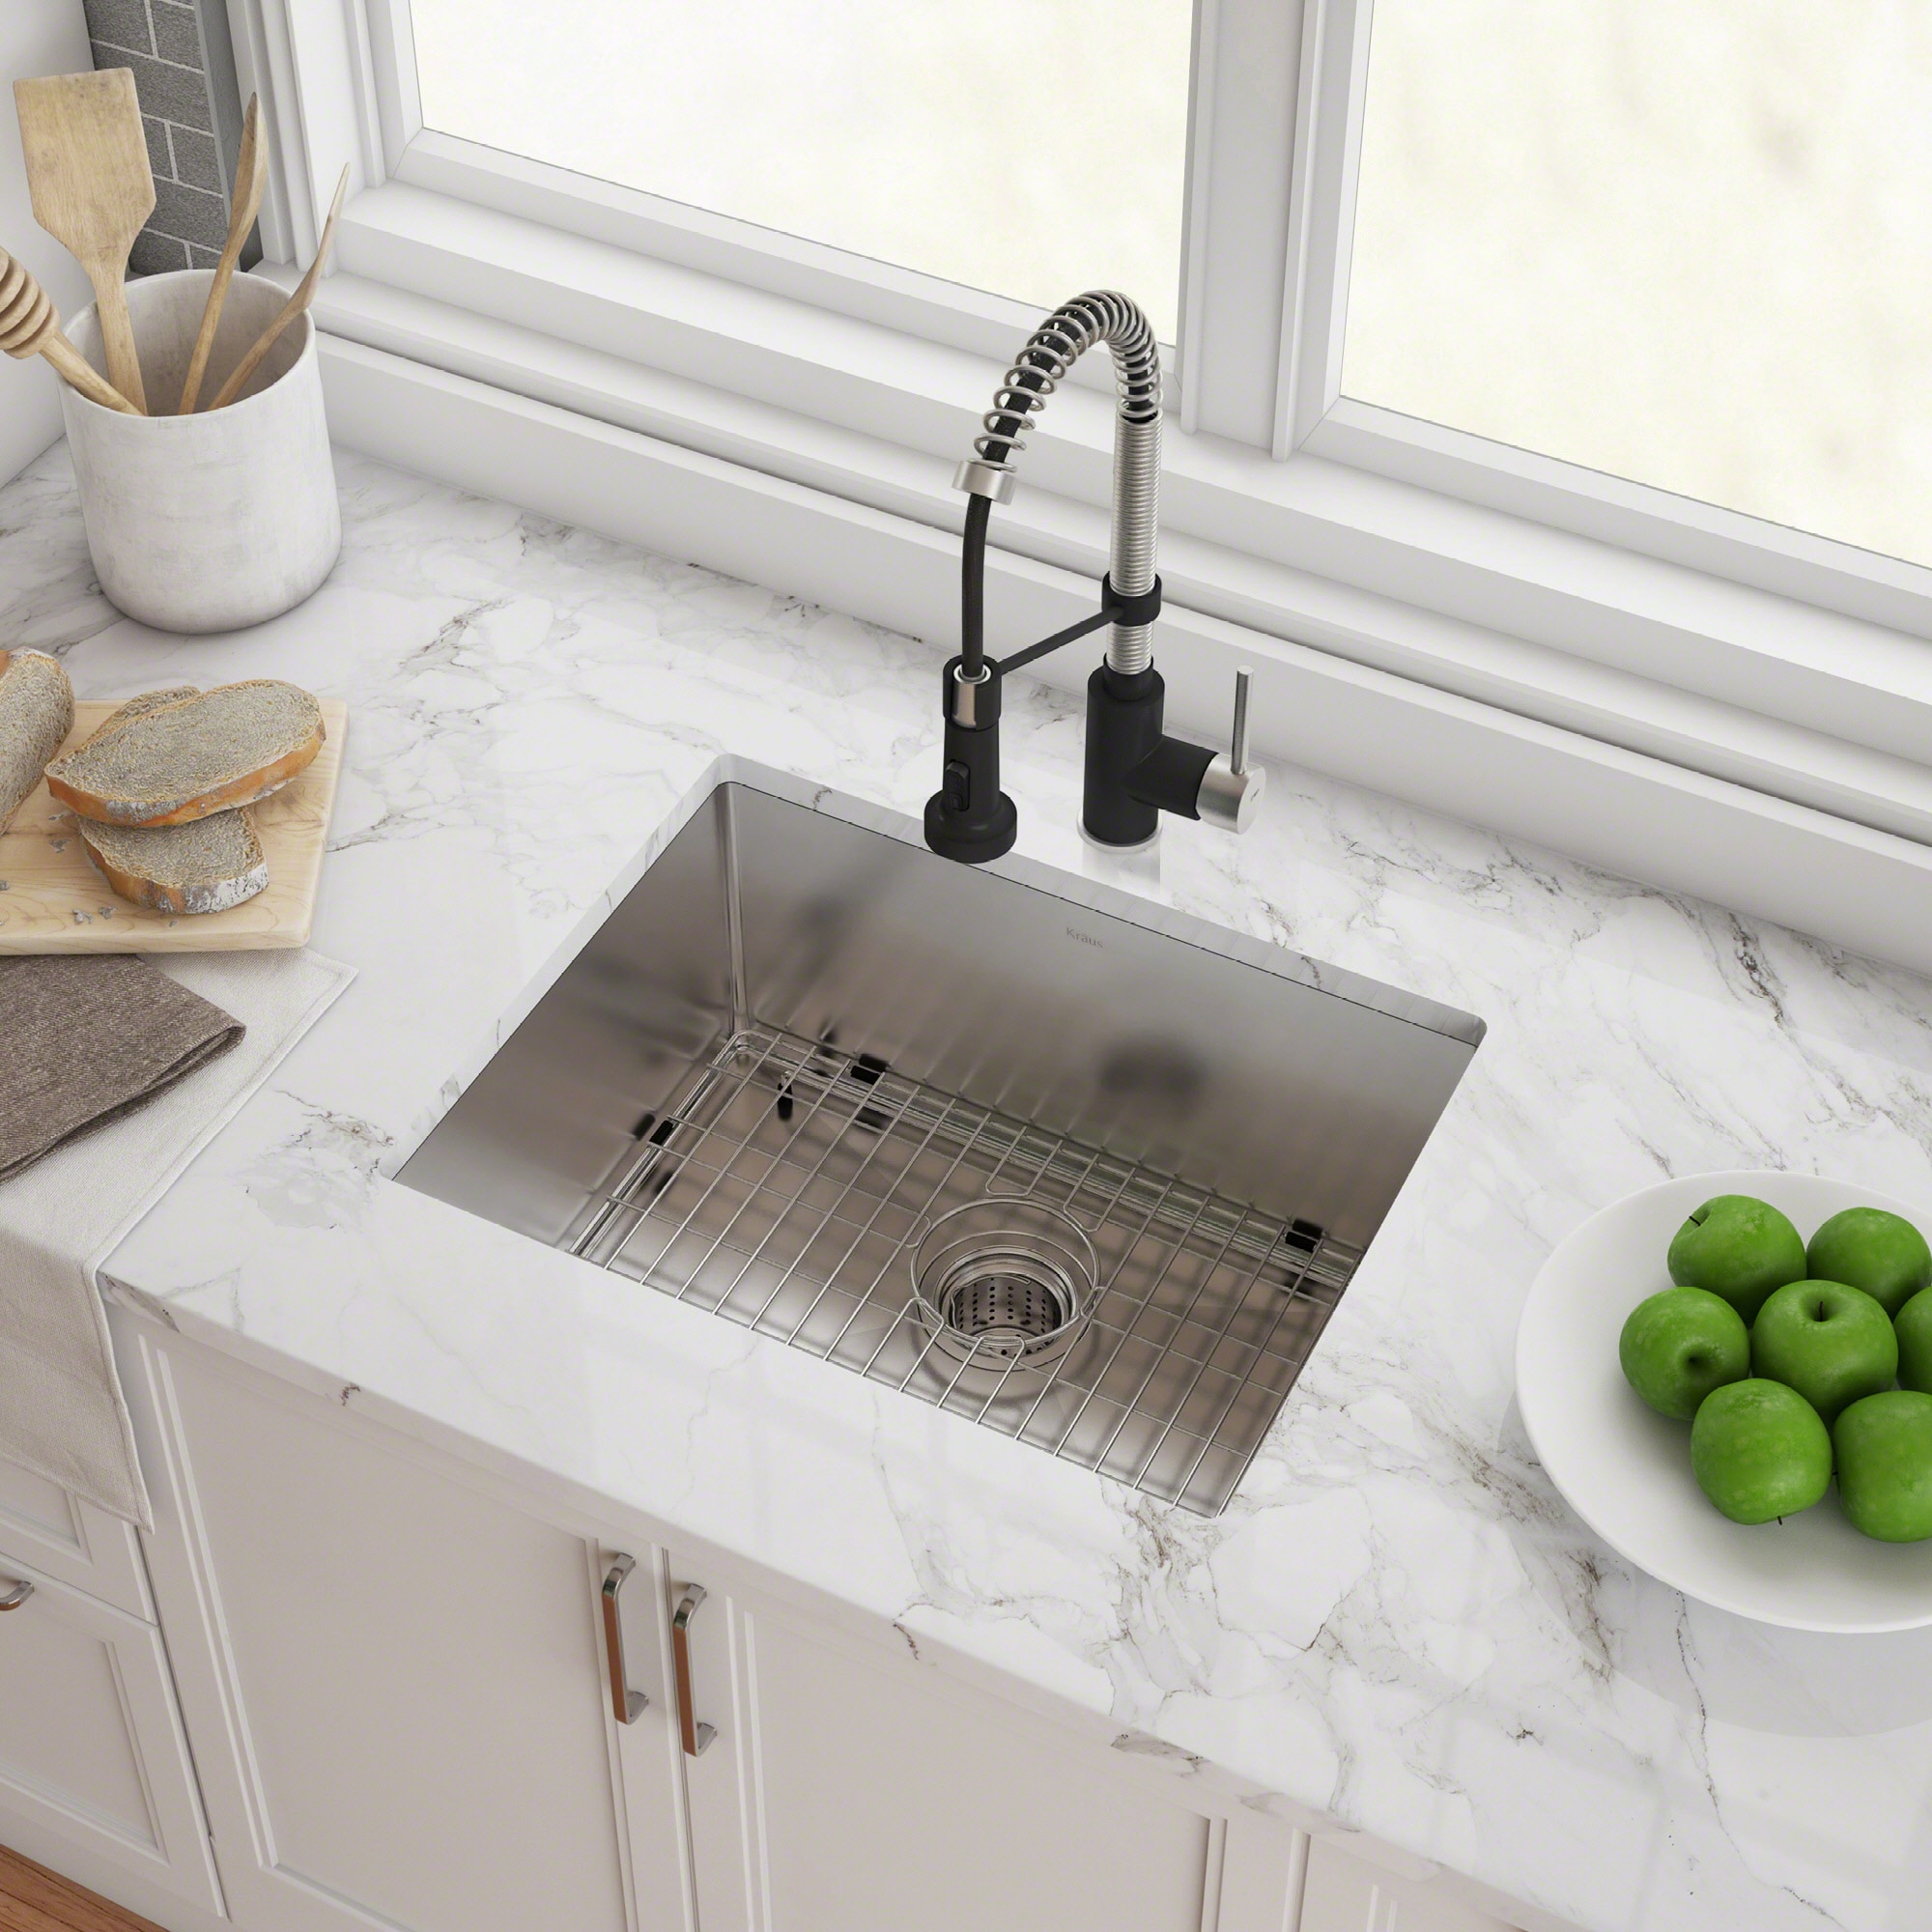 Kraus Trend Report: Kitchen Sinks for a Cleaner Kitchen